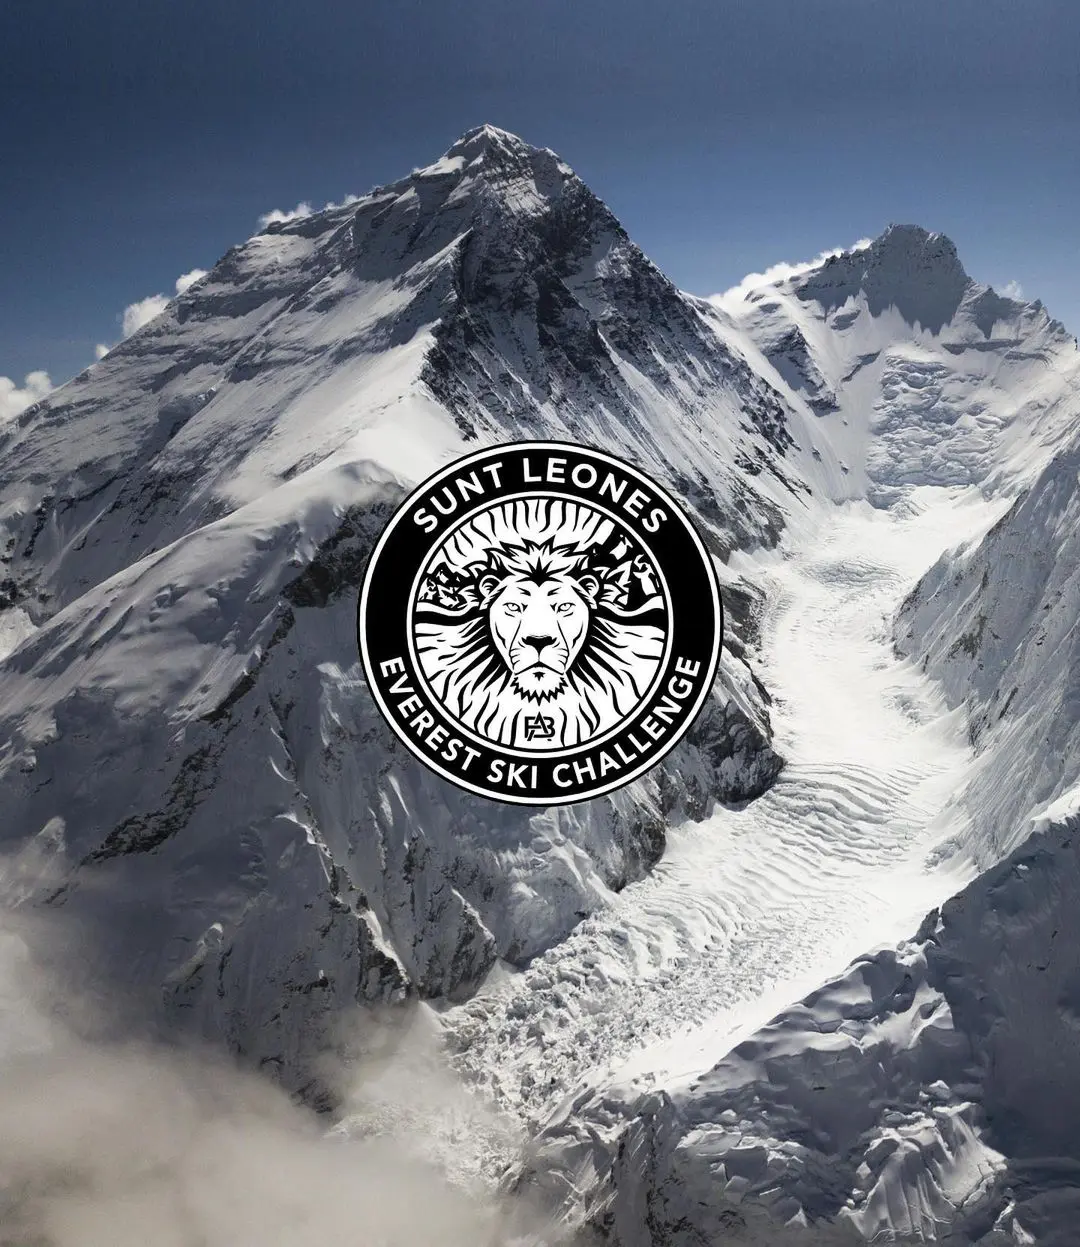 "Everest Ski Challenge"